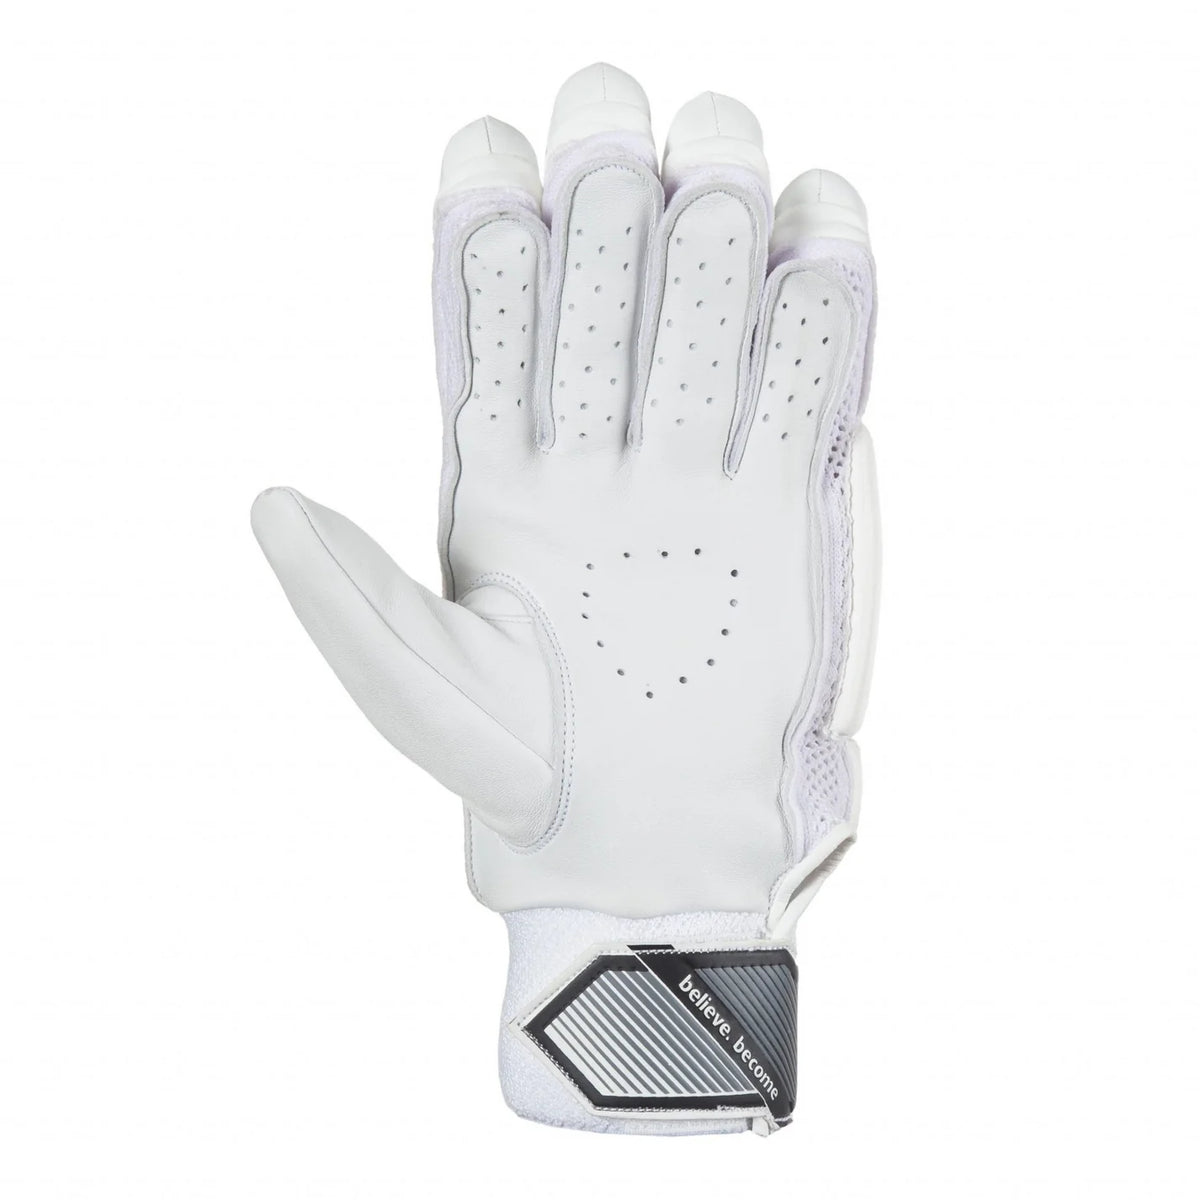 Pre-Order SG Test White Batting Glove